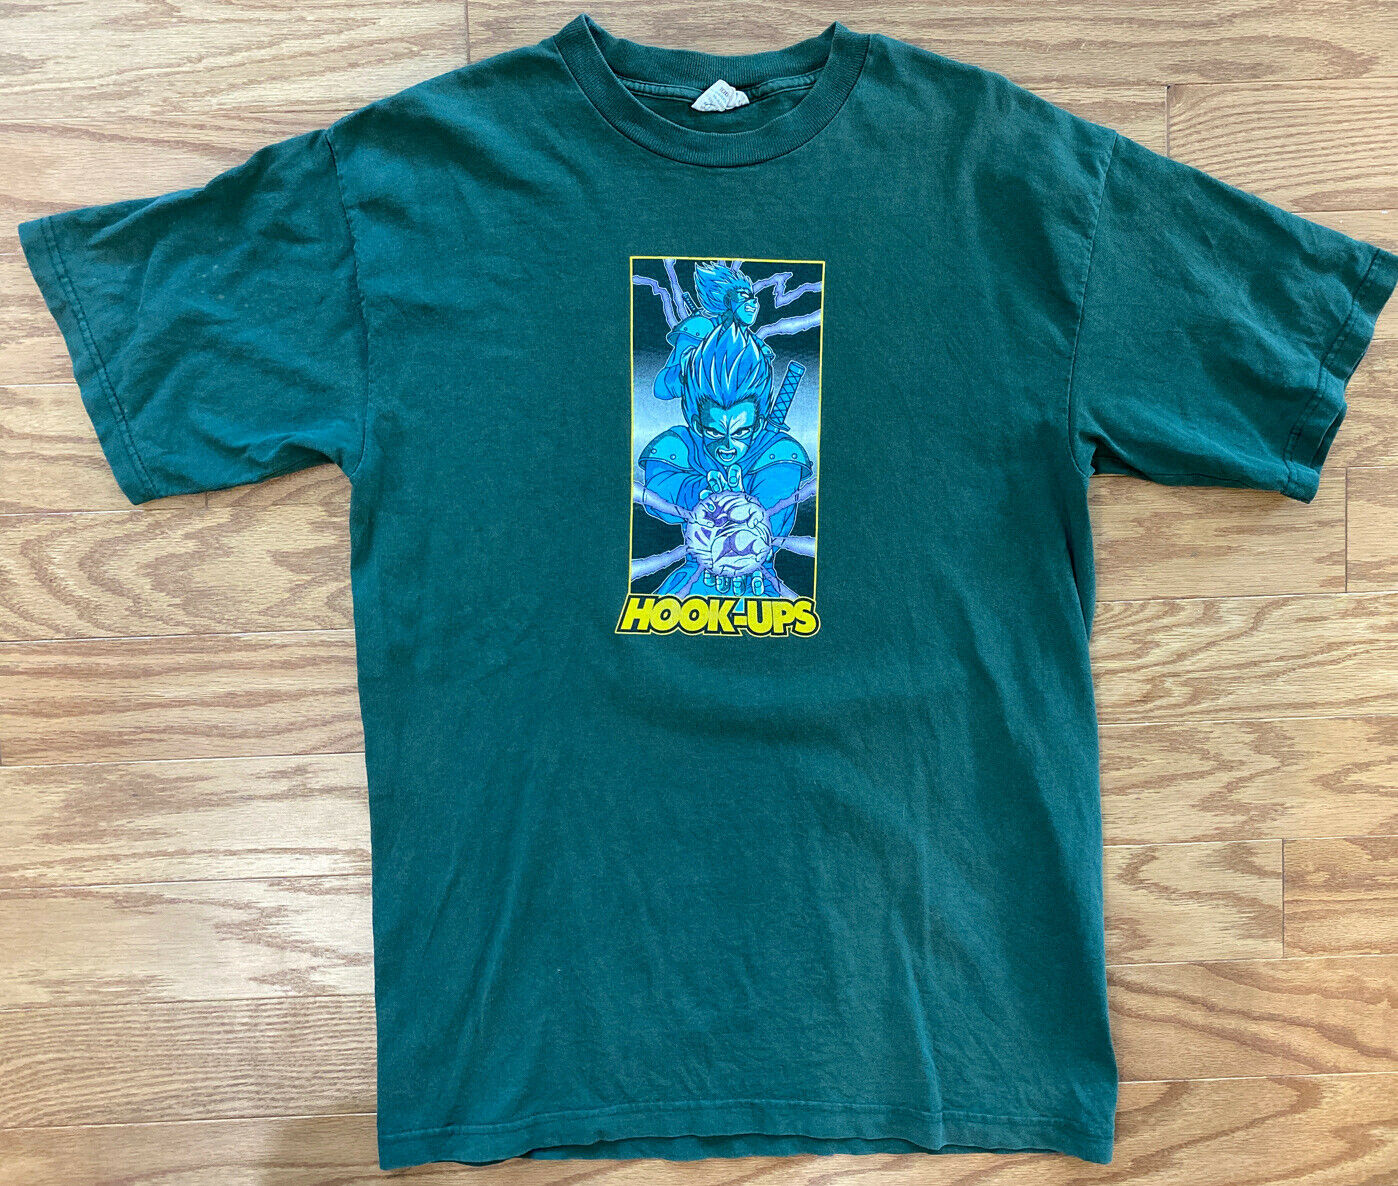 https://xetsy.com/wp-content/uploads/2020/09/Vintage-VTG-1990s-Hook-Ups-Skateboards-Dragon-Ball-Z-Shirt-Large.jpg